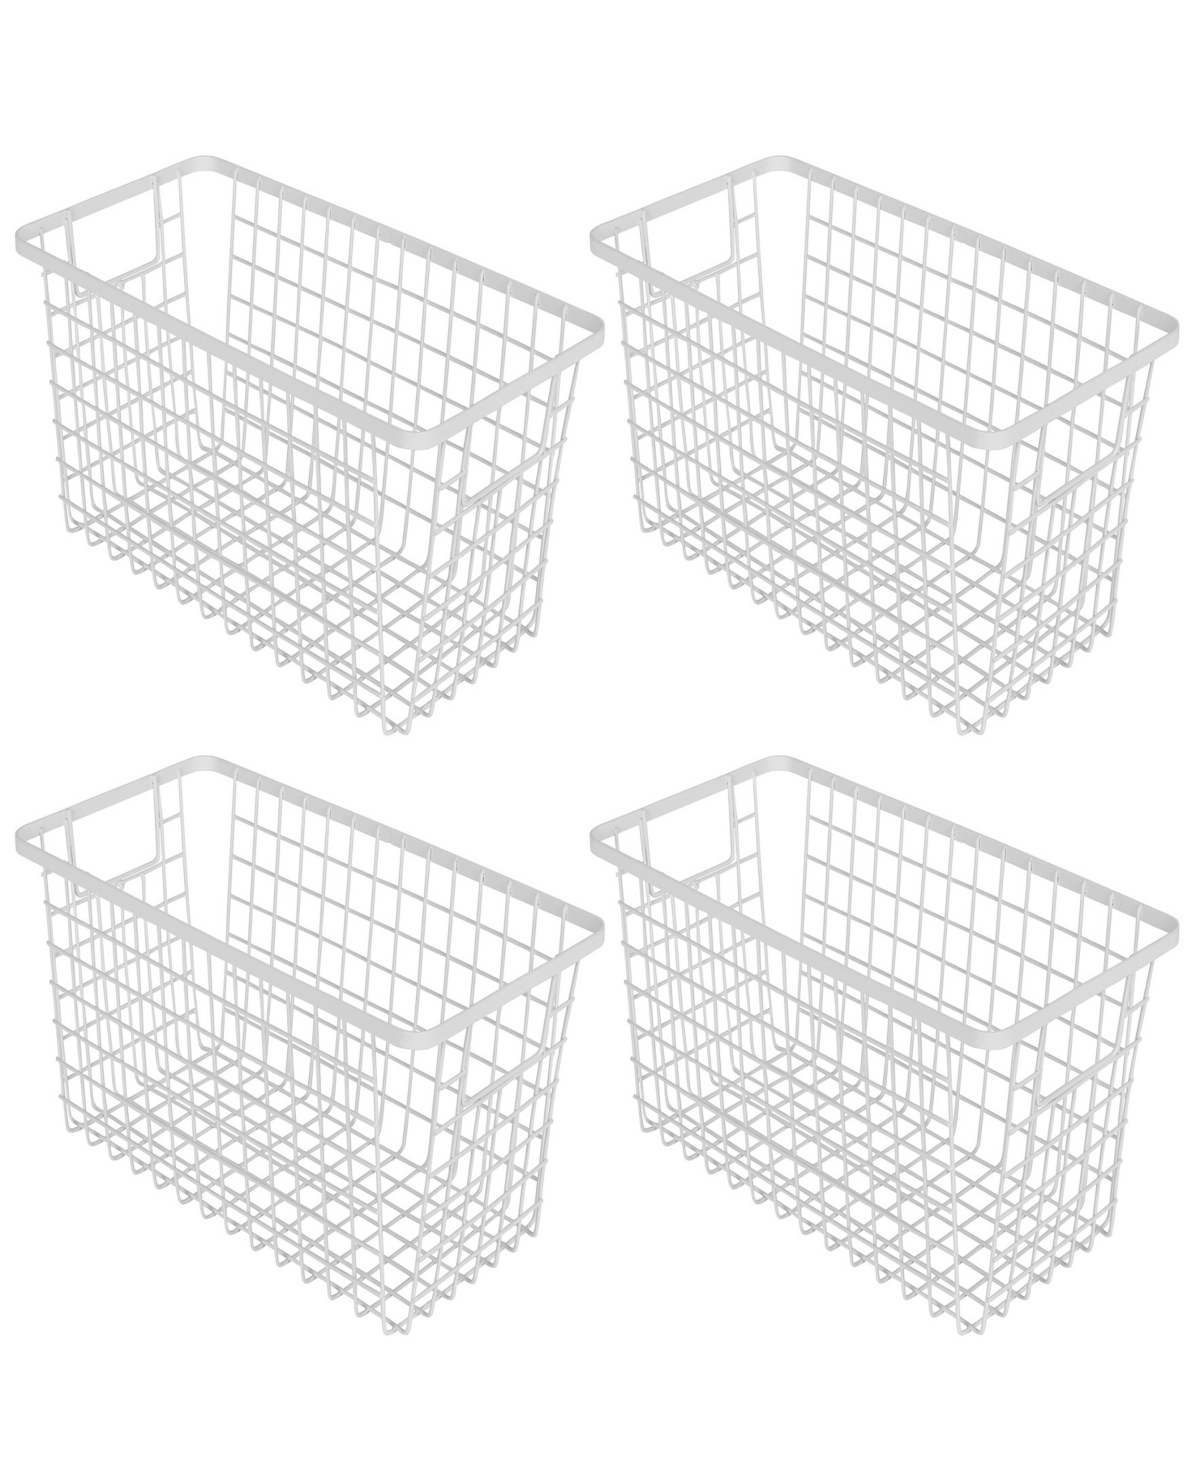 Nestable 6" x 12" x 6" Basket Organizer with Handles, Set of 4 - White